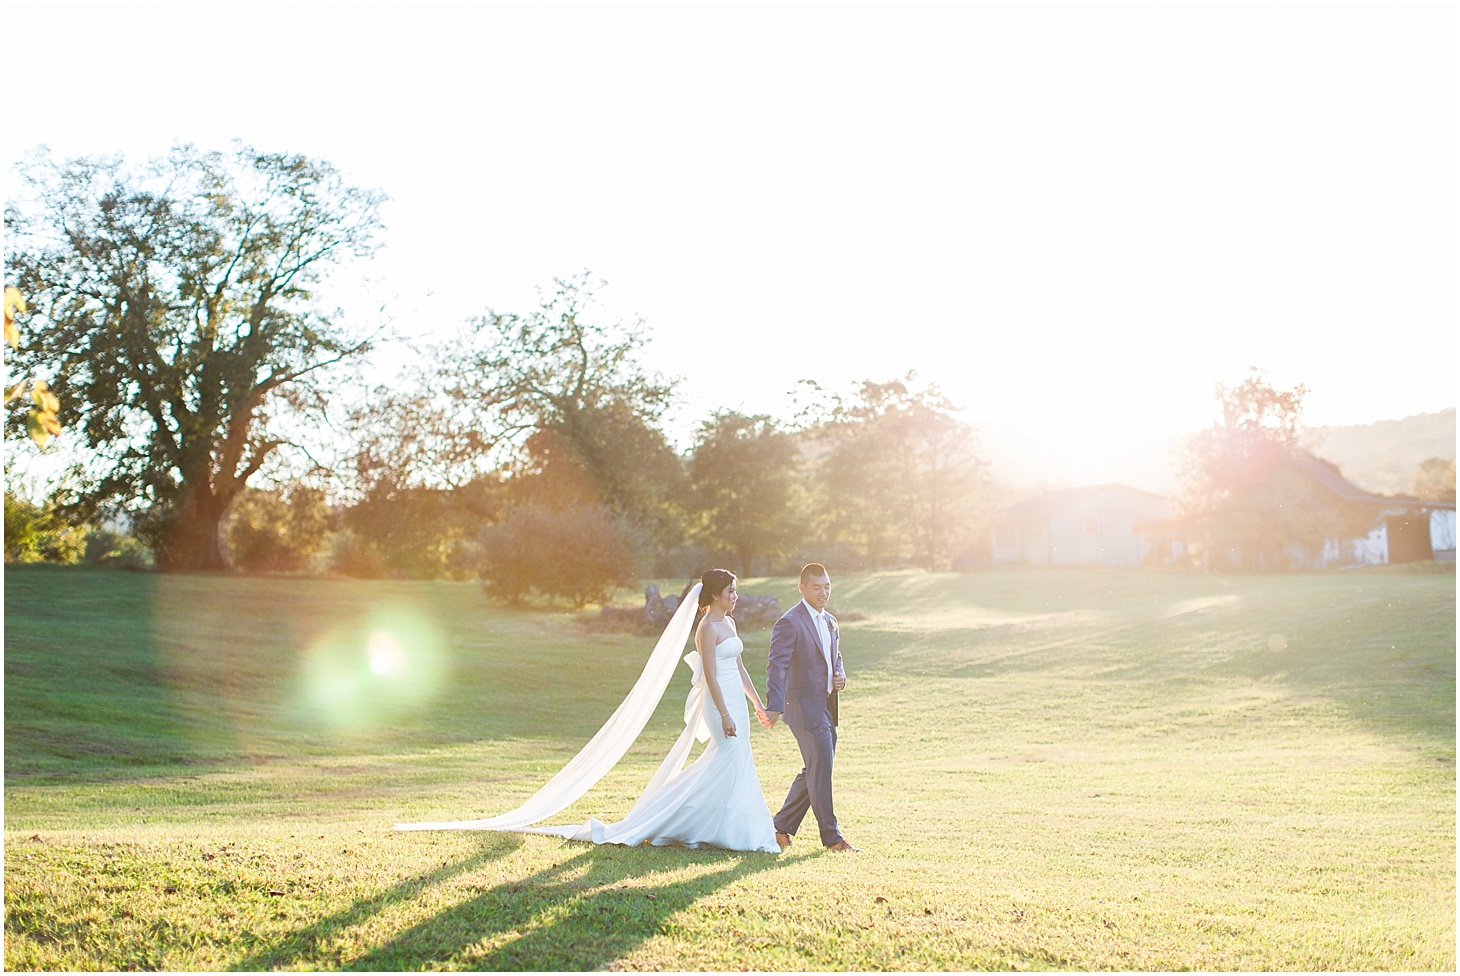 Wedding Portraits at the Raspberry Plain Manor | Elegant Fall Wedding in Leesburg, VA | Sarah Bradshaw Photography 